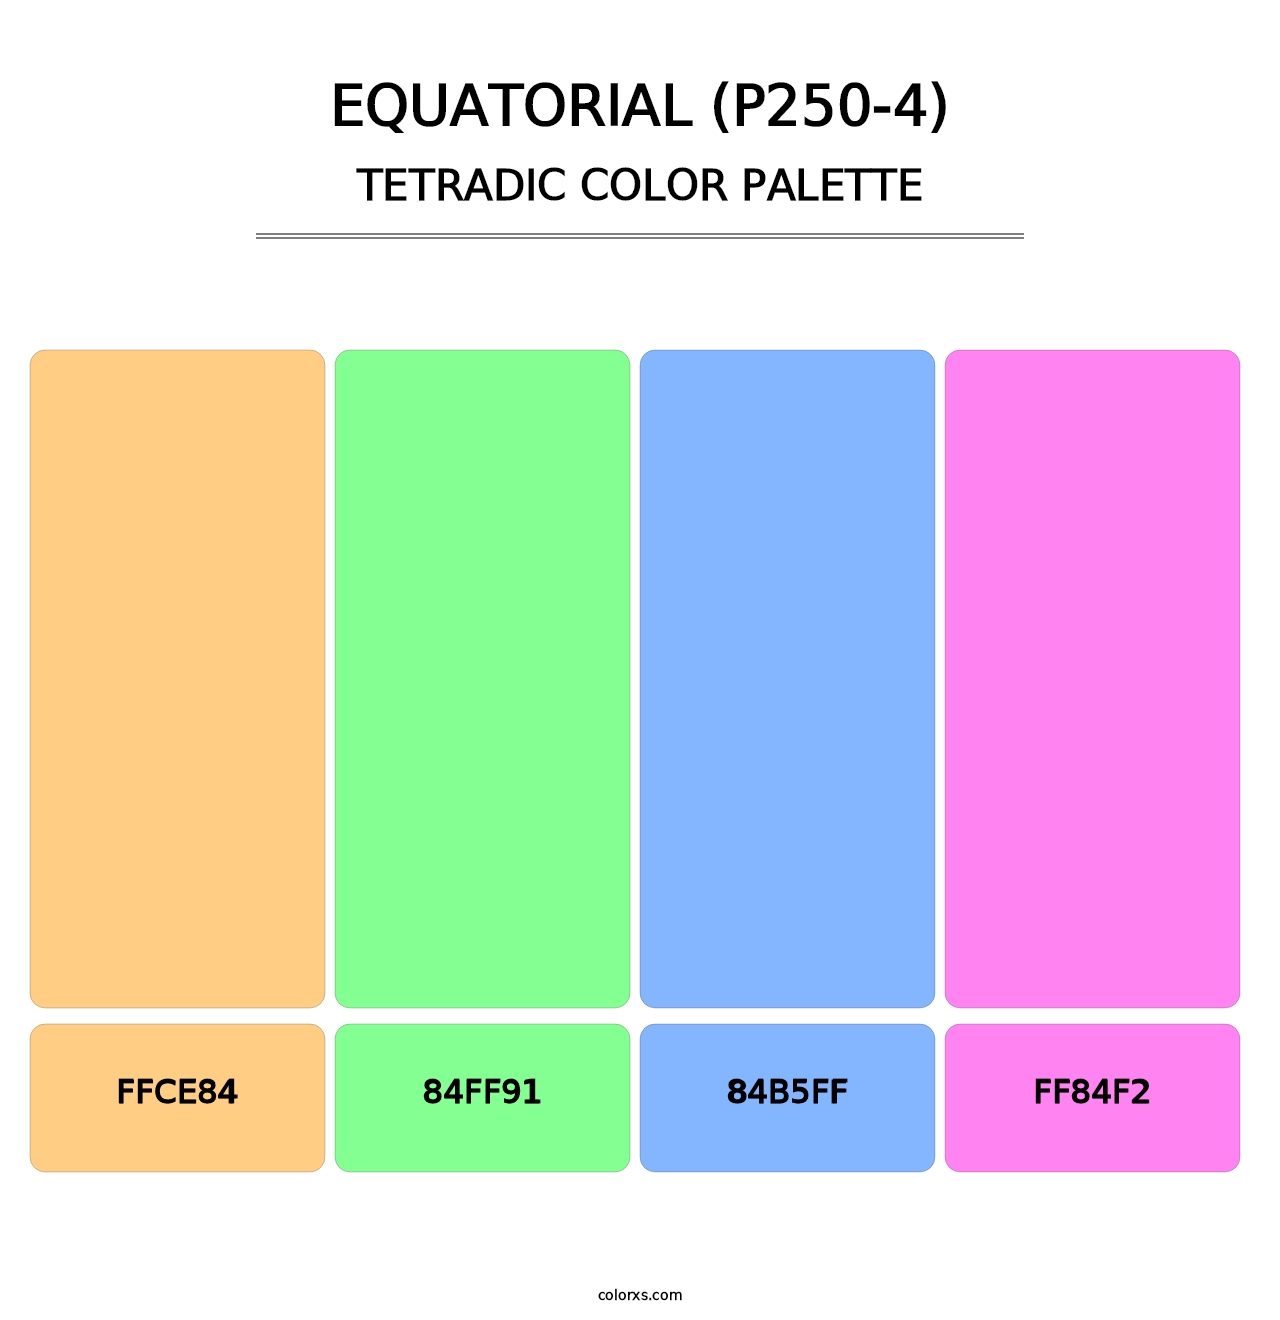 Equatorial (P250-4) - Tetradic Color Palette